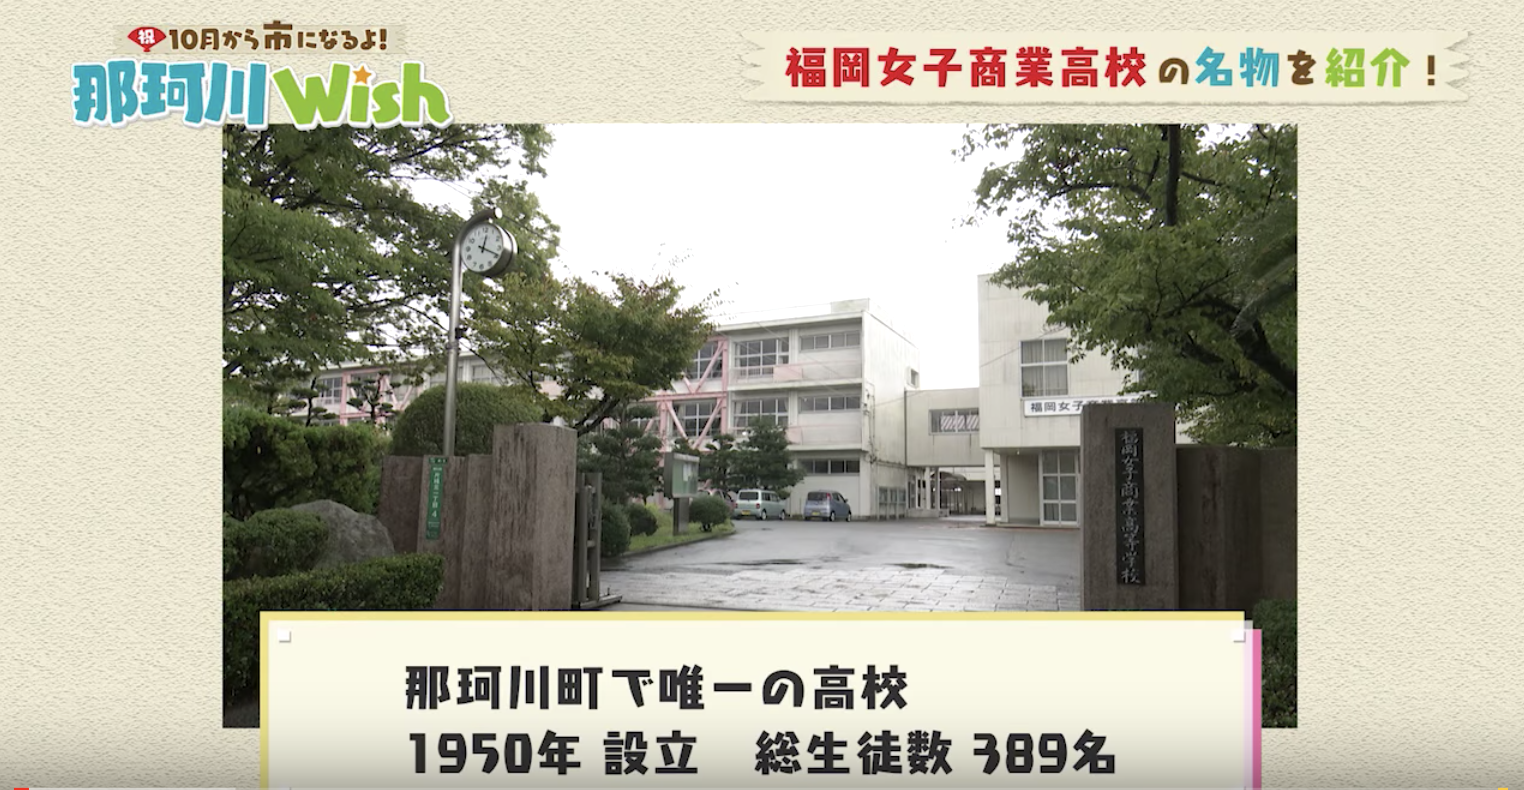 KBC「ガクセイWish」で福岡女子商業高等学校が紹介されました